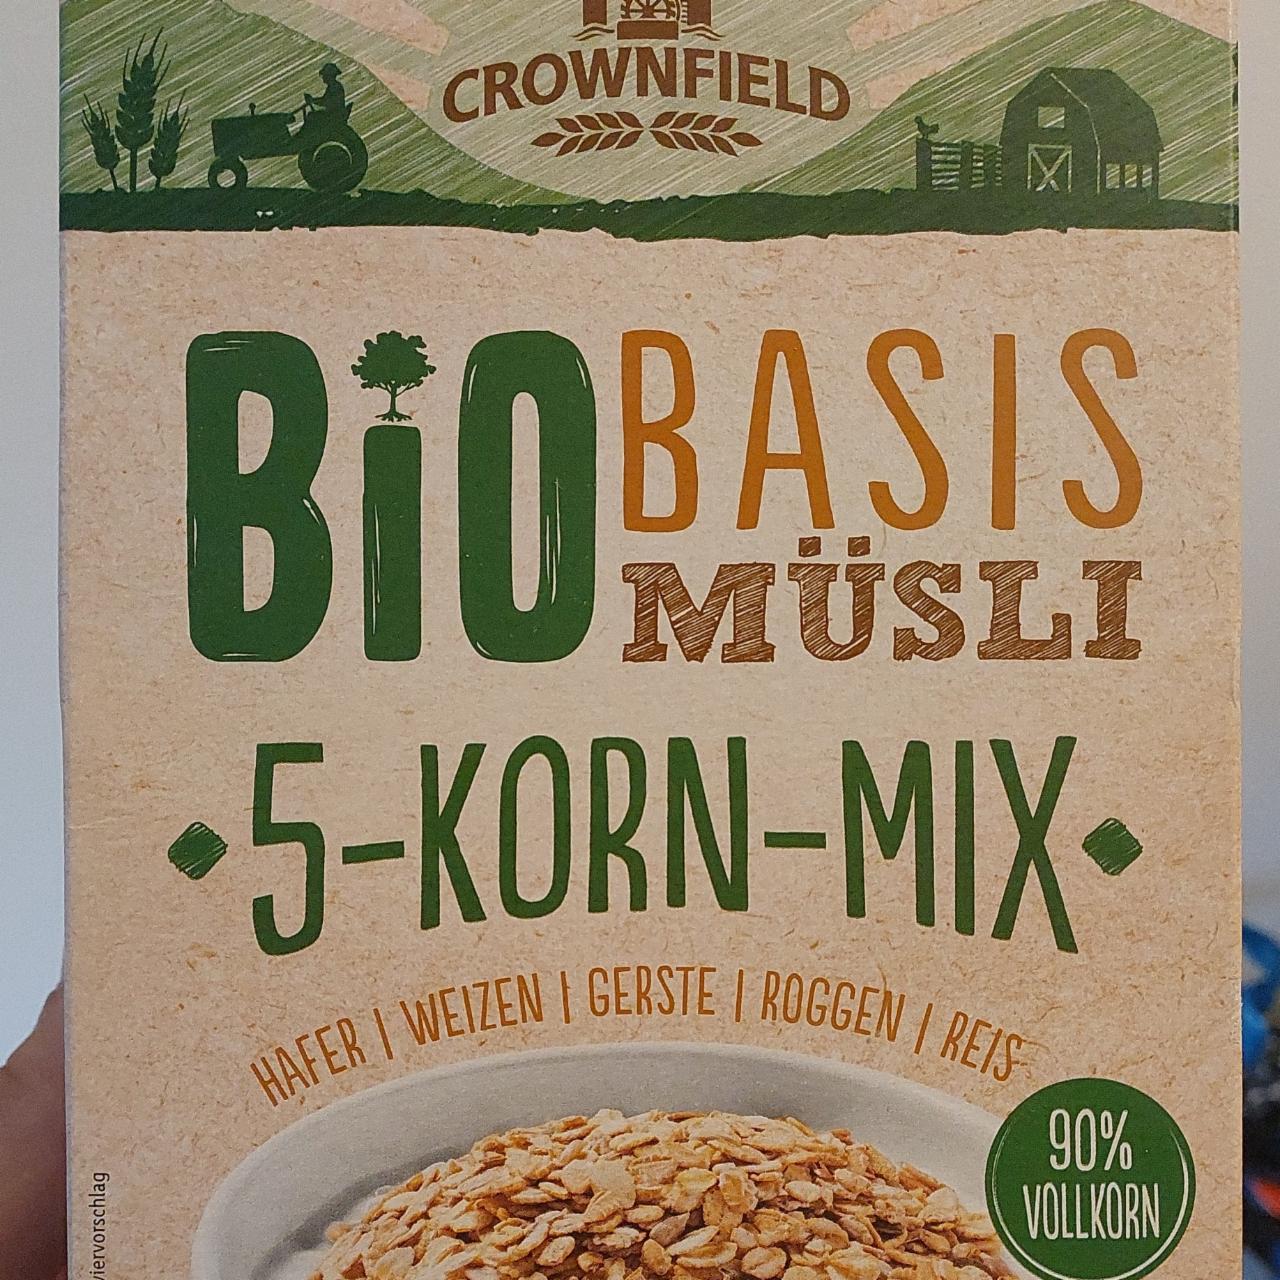 Фото - Bio Basis Müsli 4 korn mix Crownfield